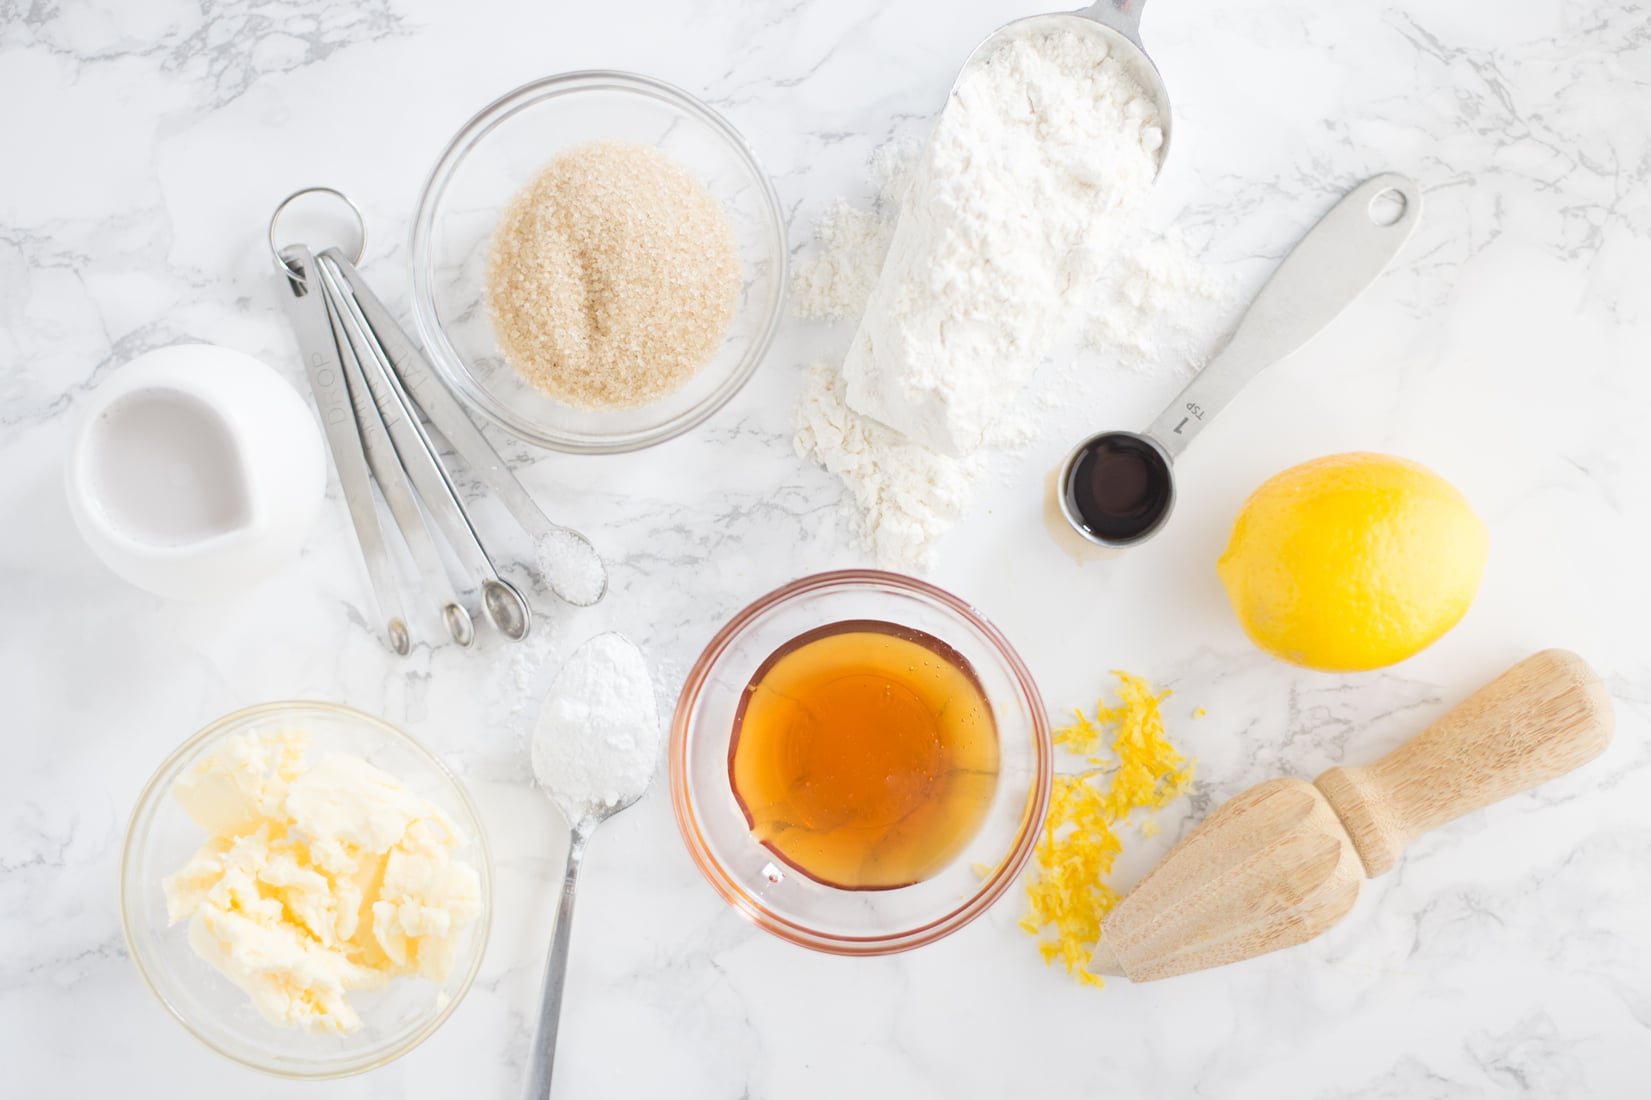 lemon, vanilla extract, butter, flour, sugar on marble counter